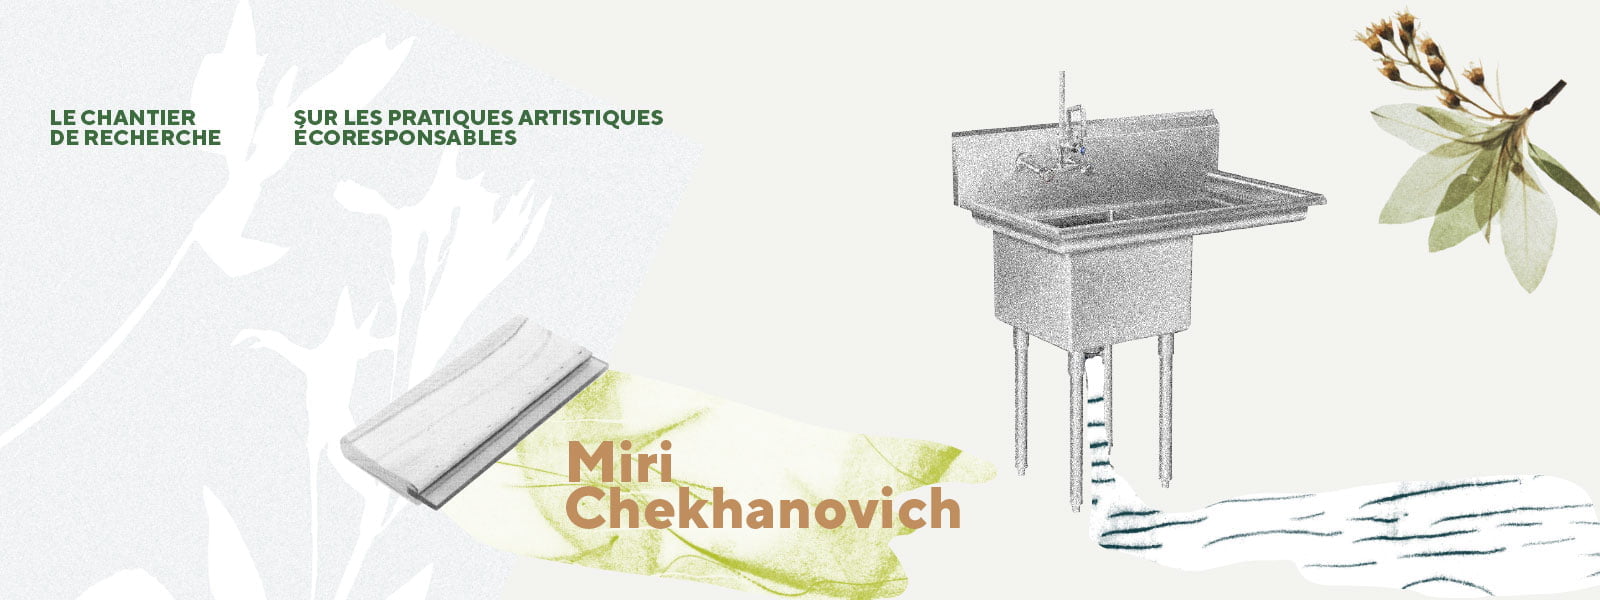 Miri Chekhanovich